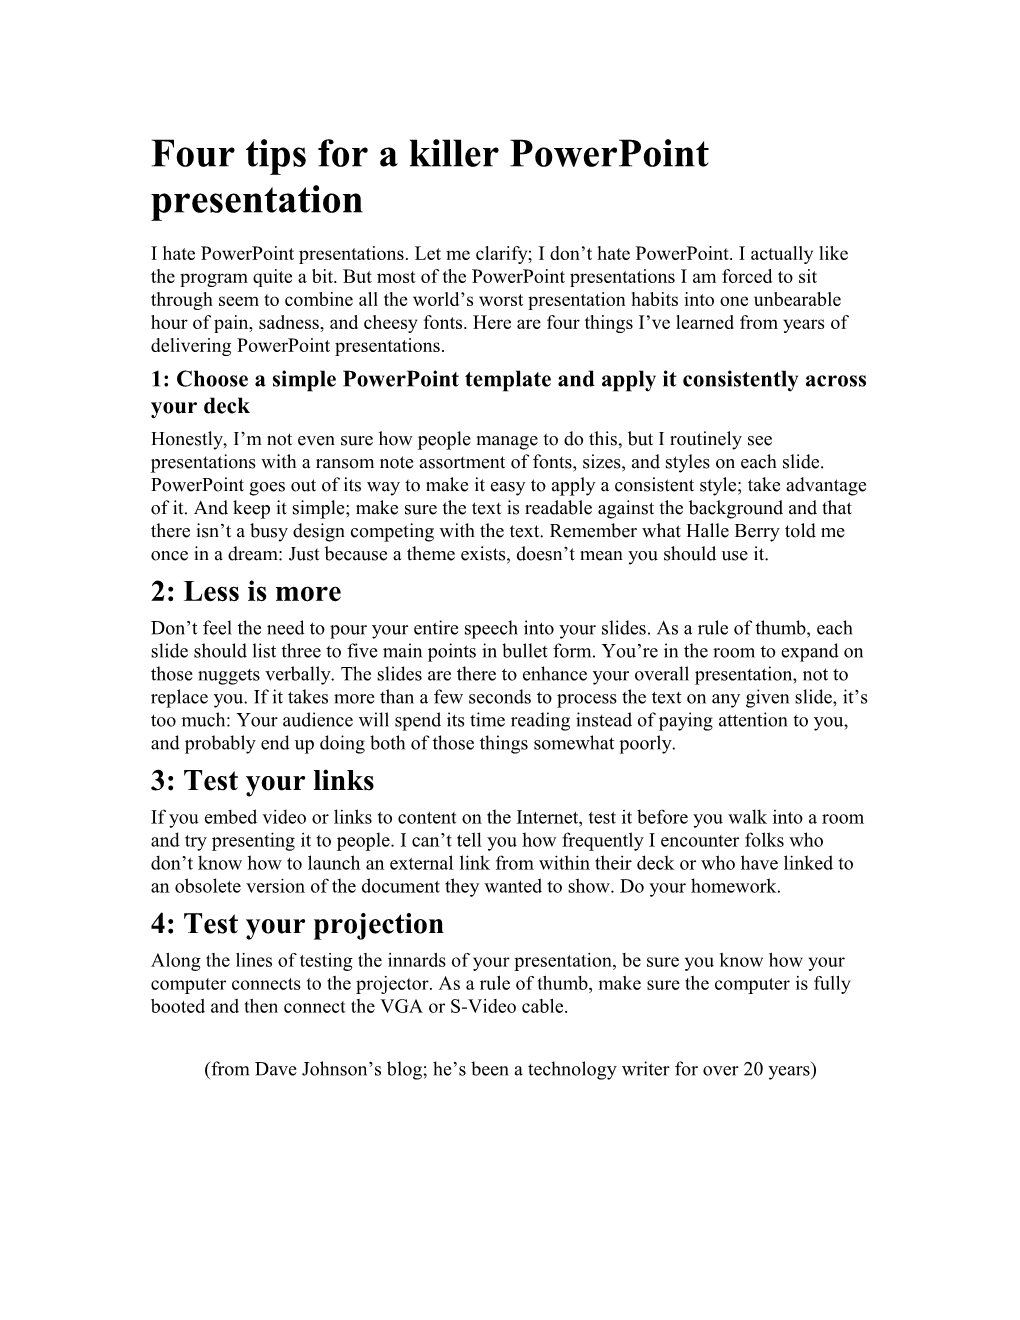 Four Tips for a Killer Powerpoint Presentation